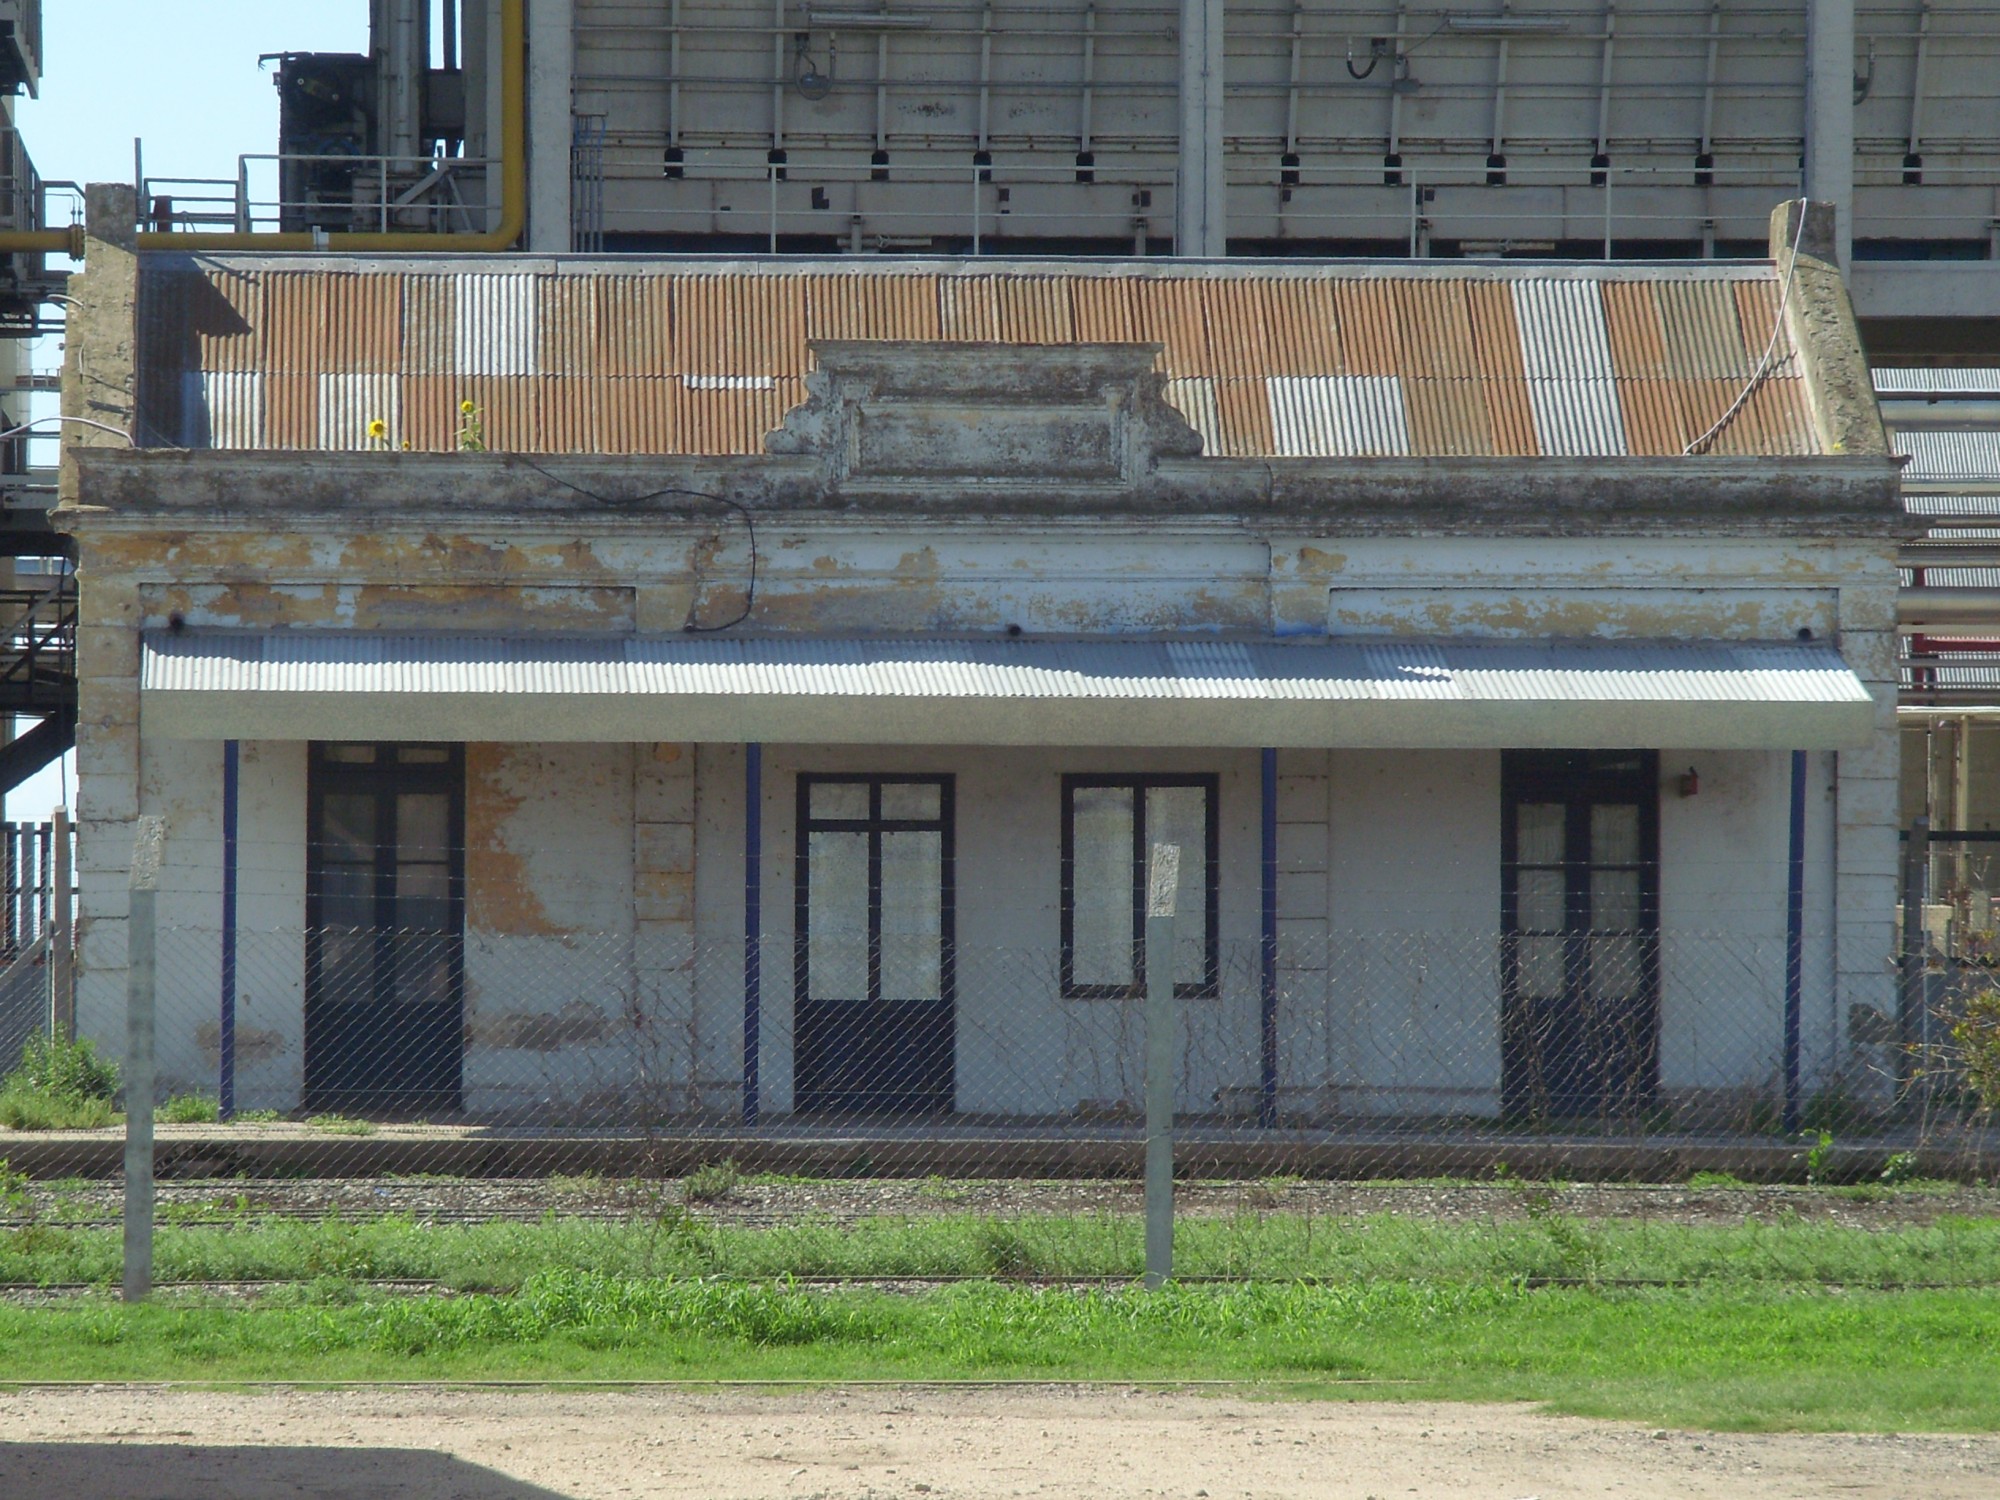 Foto: estación General Deheza - General Deheza (Córdoba), Argentina